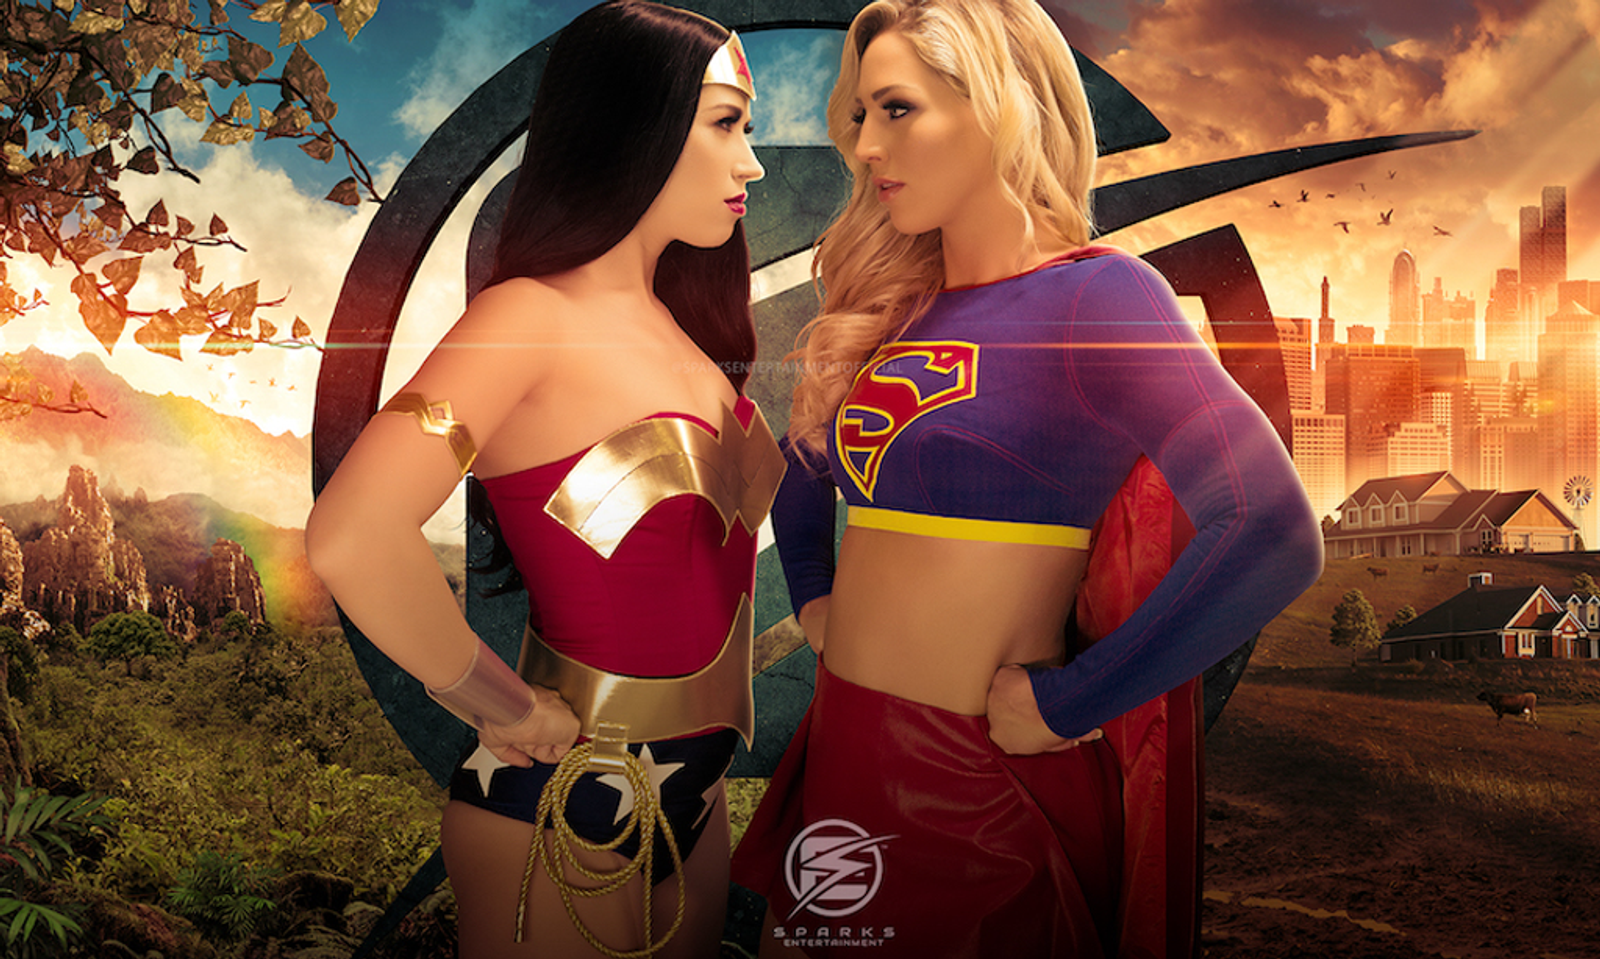 Sparks Entertainment Drops 'Supergirl vs. Wonder Woman' Teaser